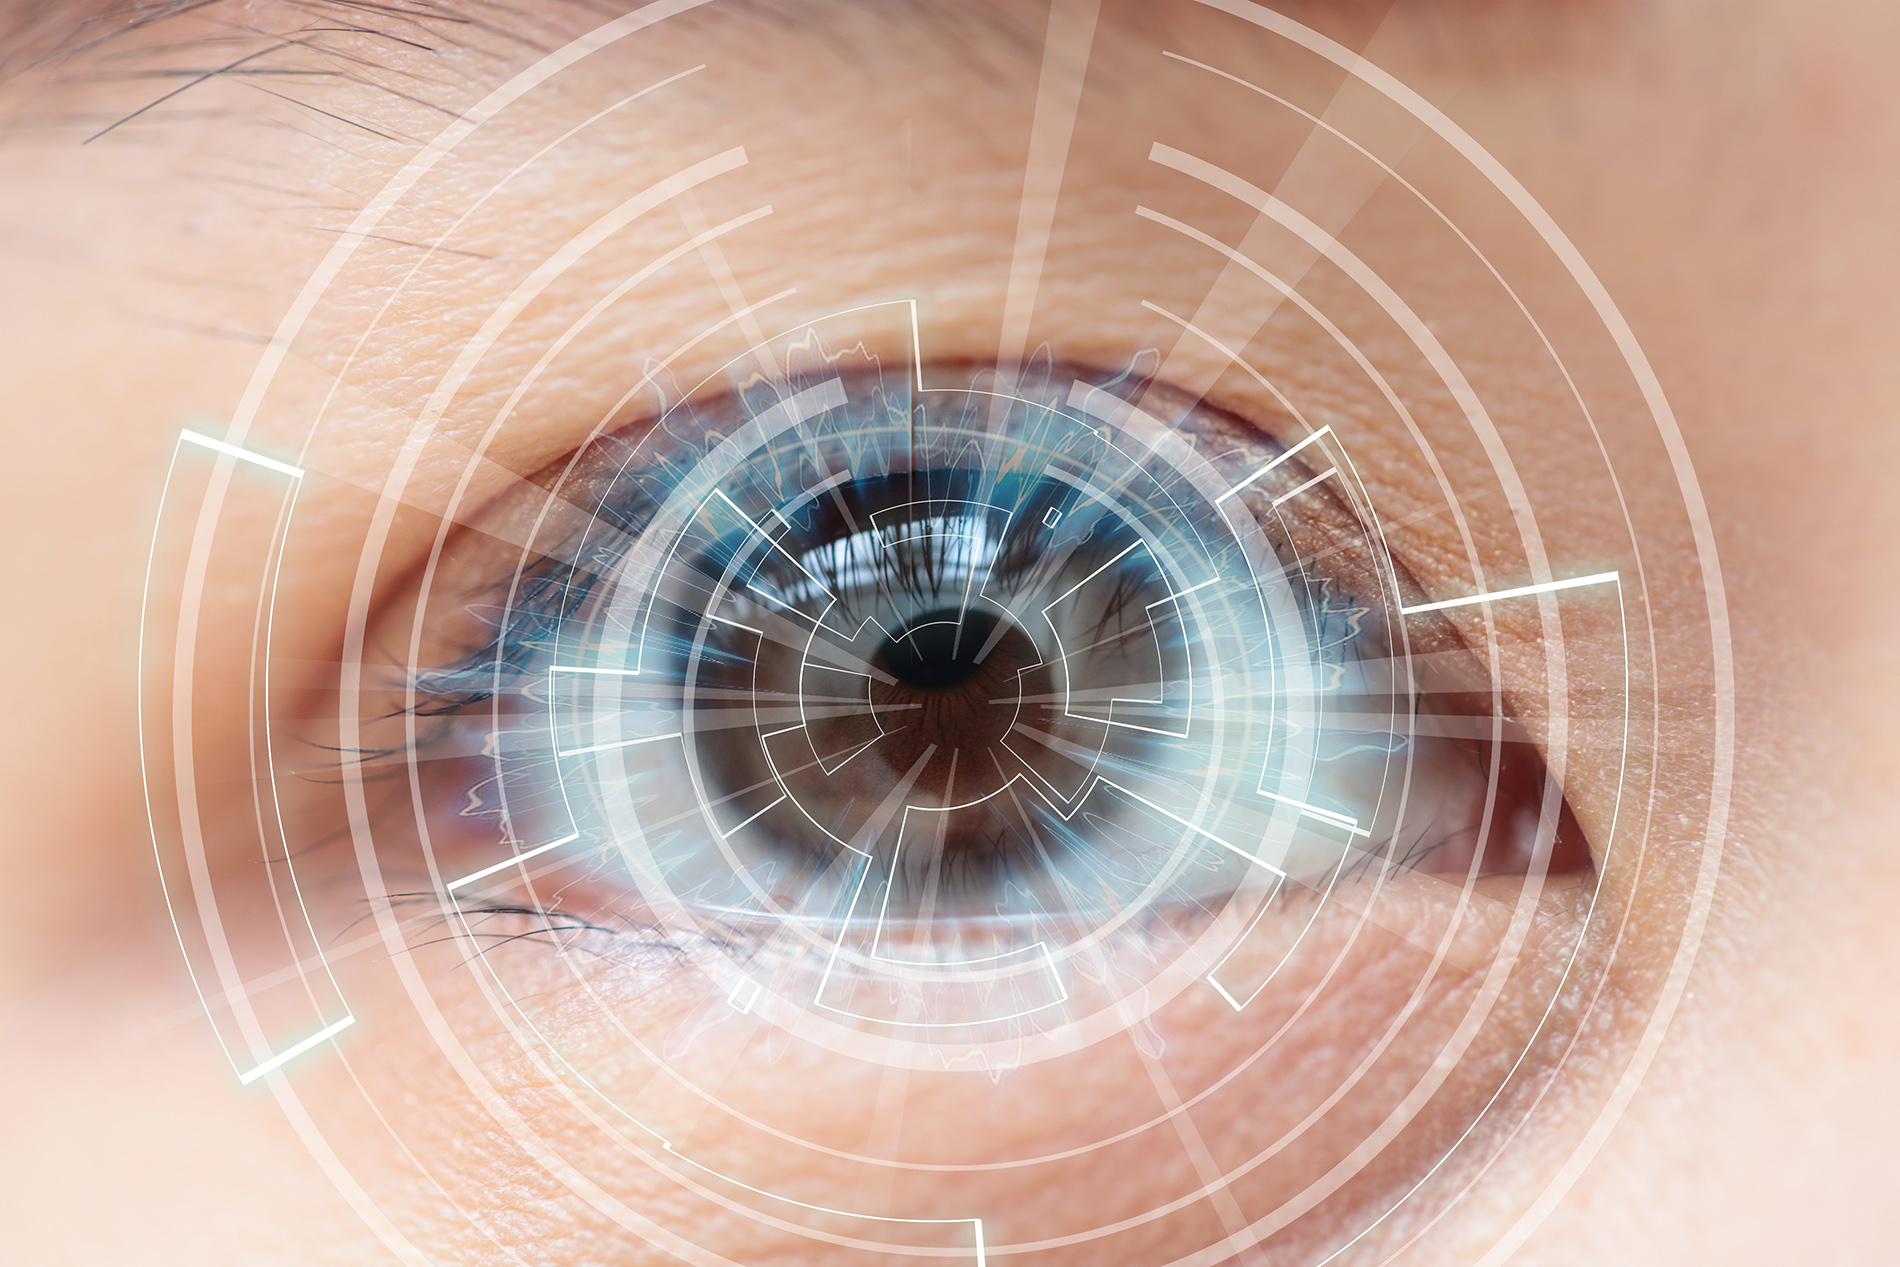 Close up image of human eye